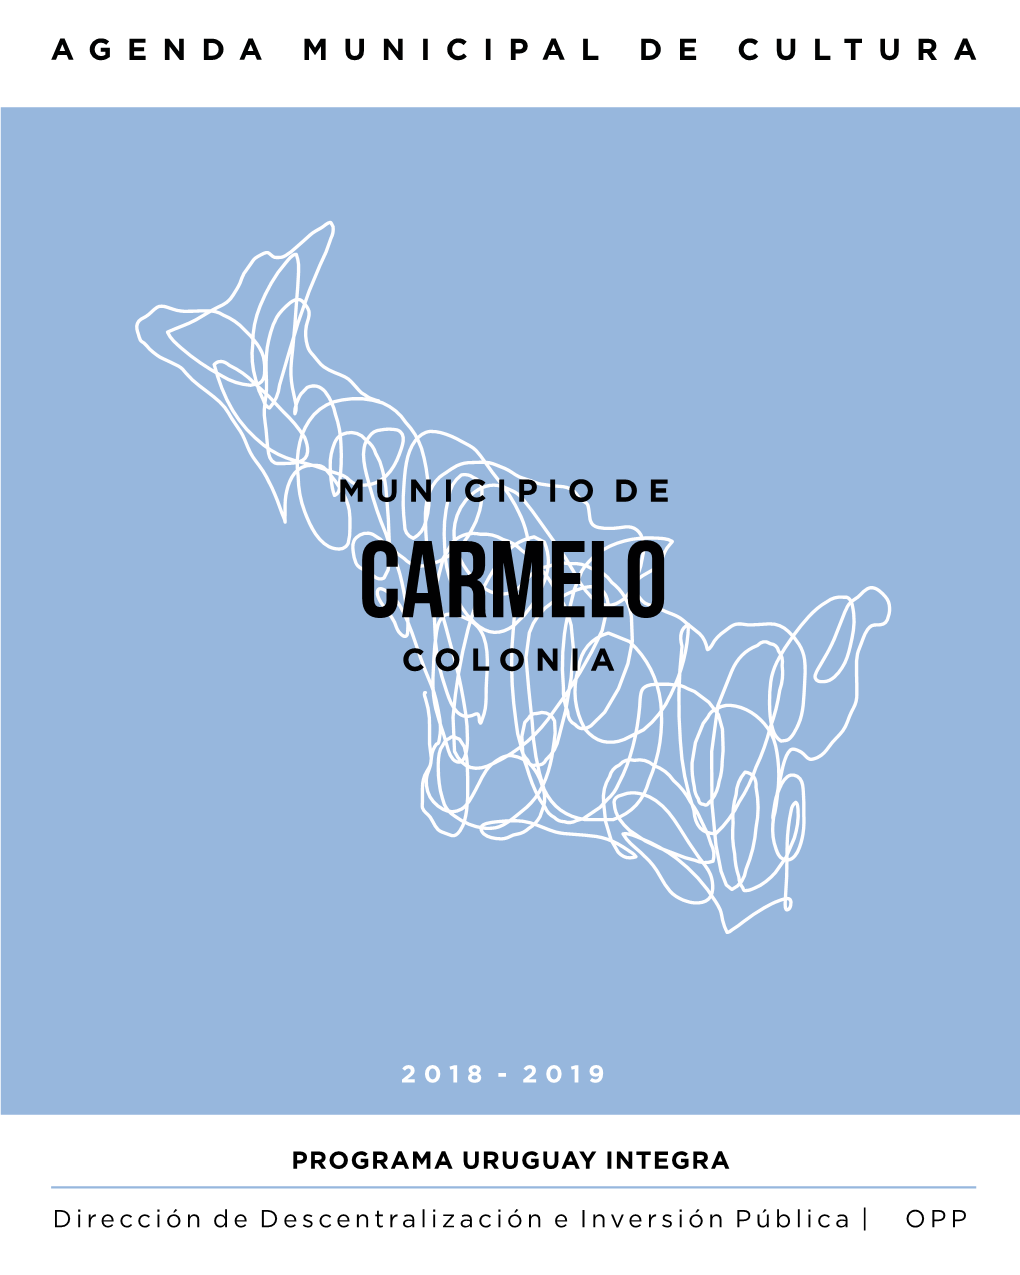 Agenda Municipal De Cultura De Carmelo